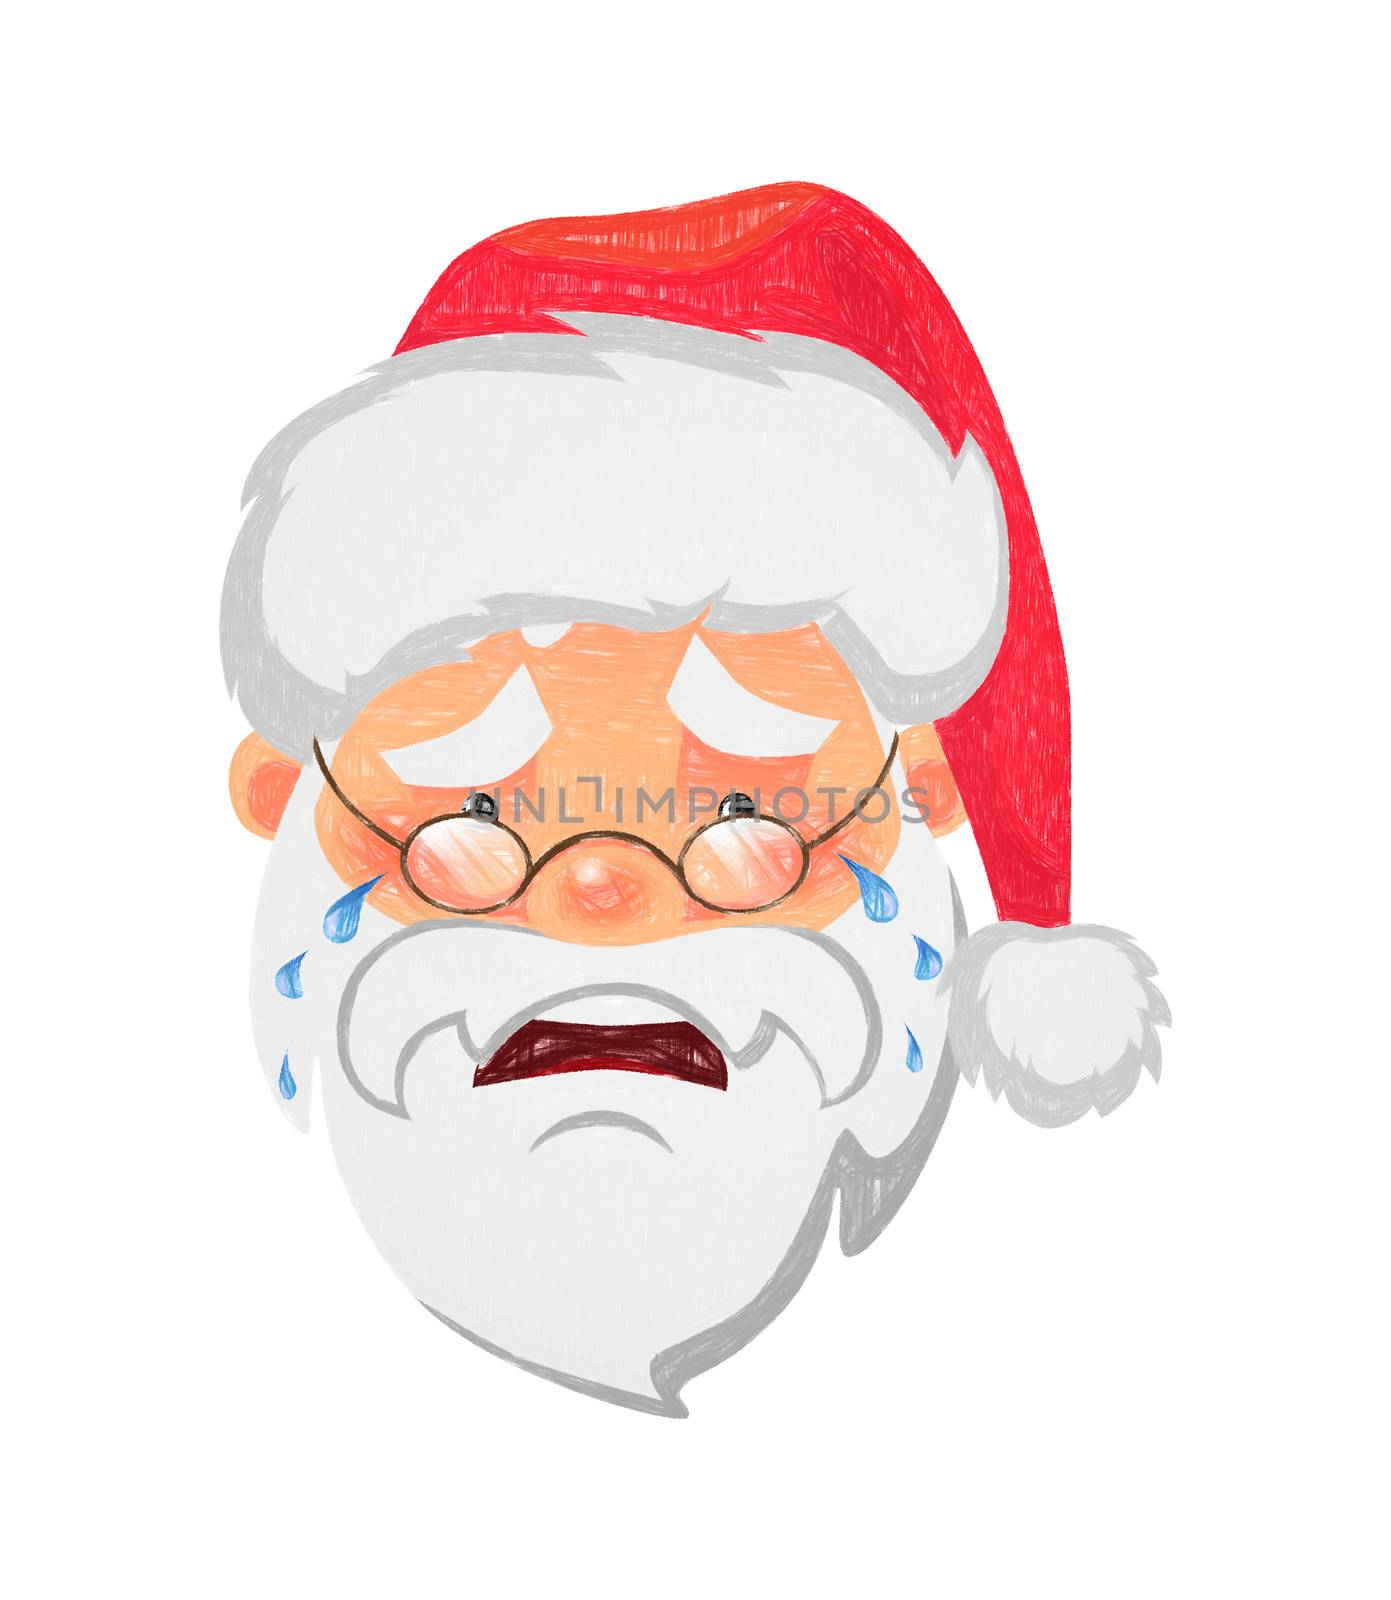 Santa Claus icon by Visual-Content